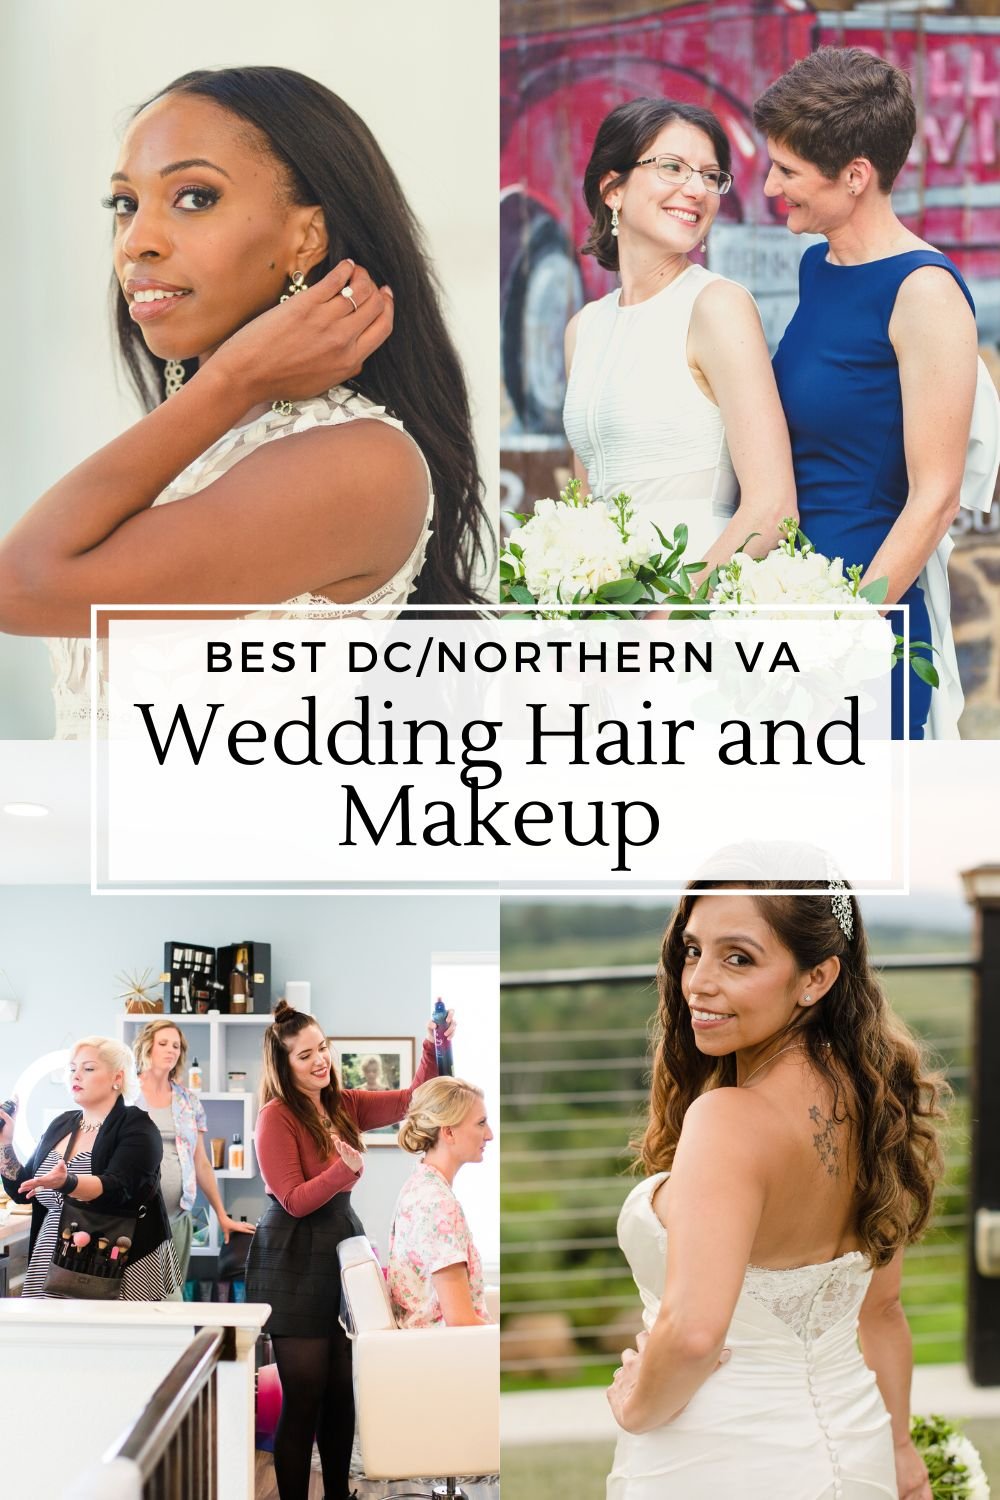 best hair and makeup wedding dc northern va.jpg